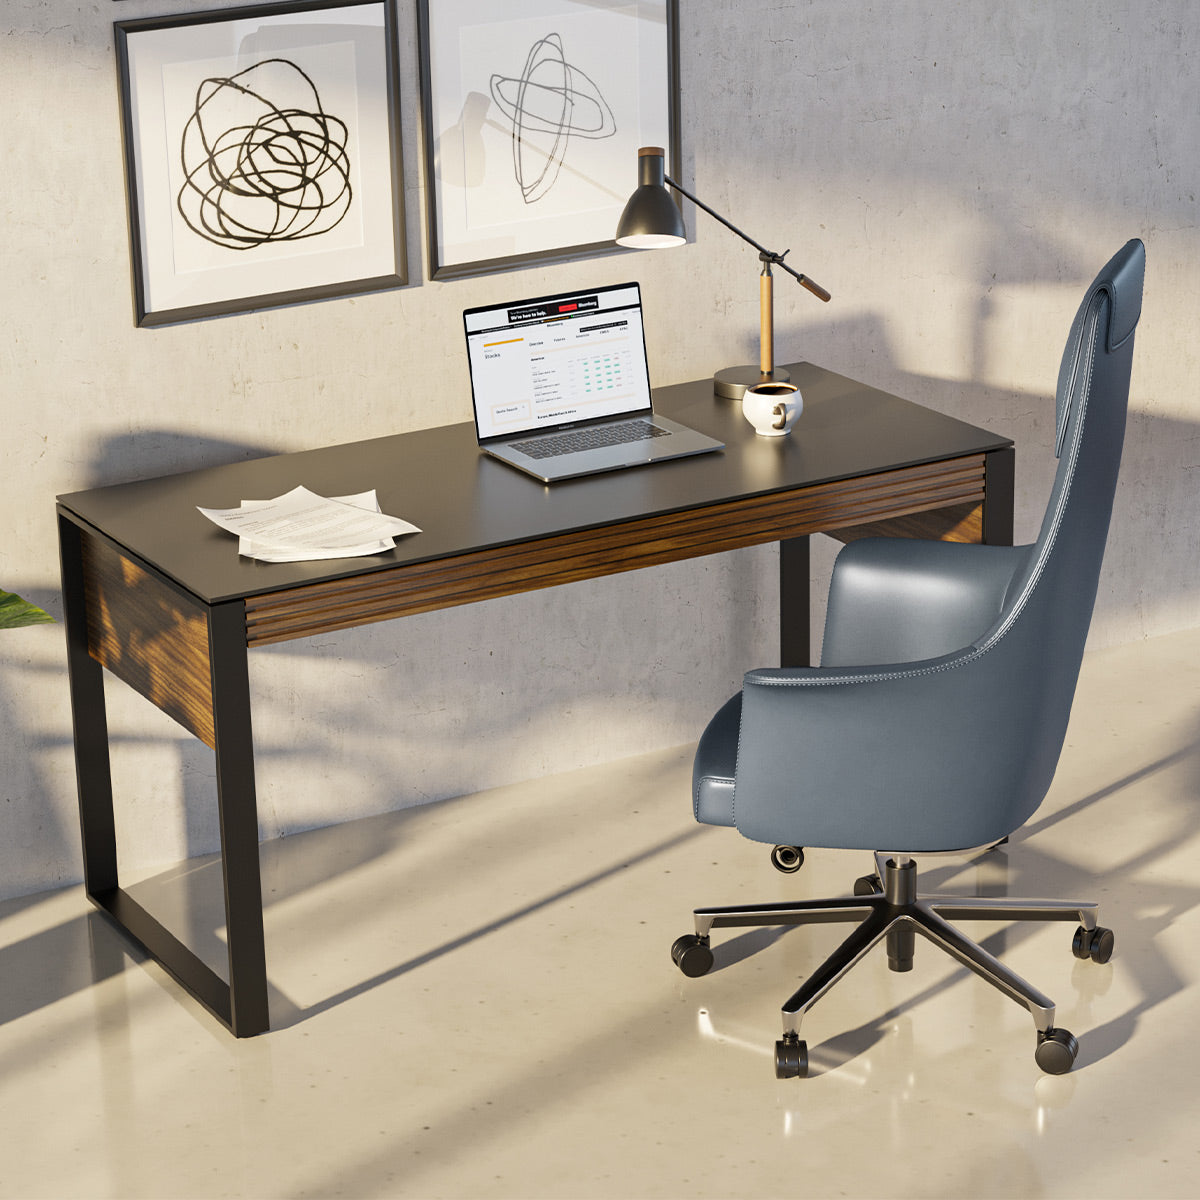 BDI Bolo 3531 Executive Leather Office Chair (Ocean)